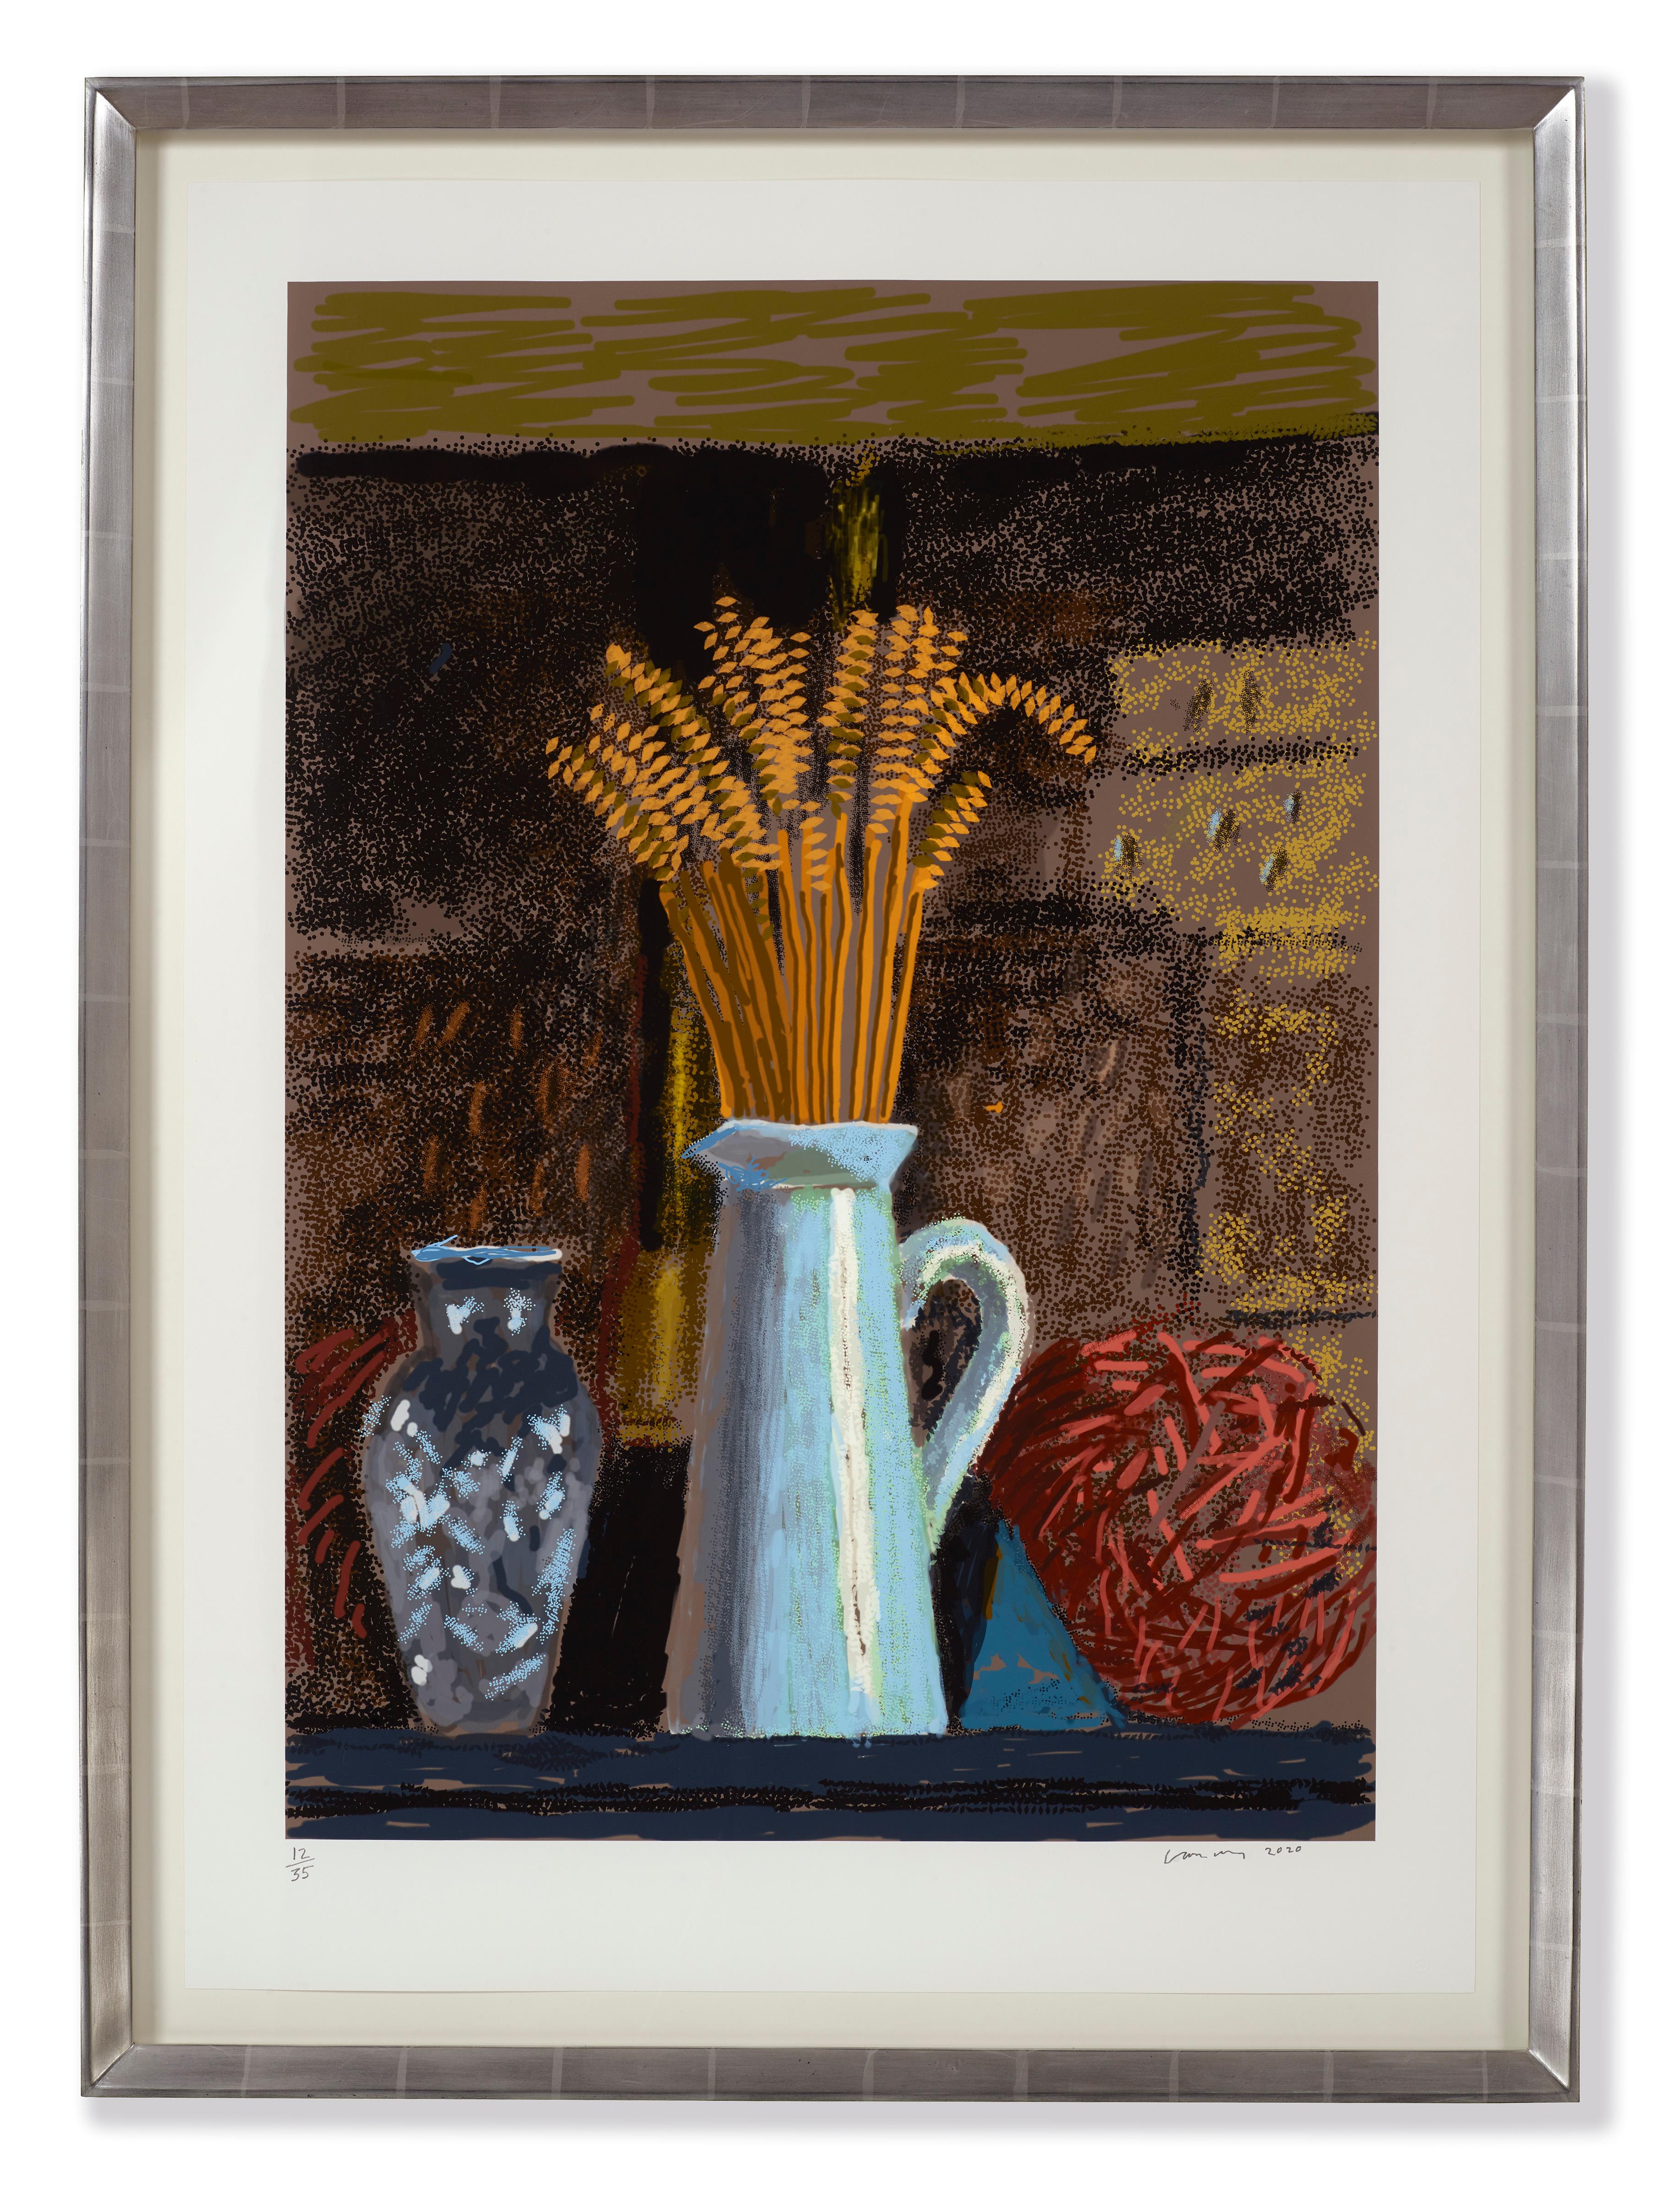 David Hockney Interior Print - Glass Vase, Jug and Wheat